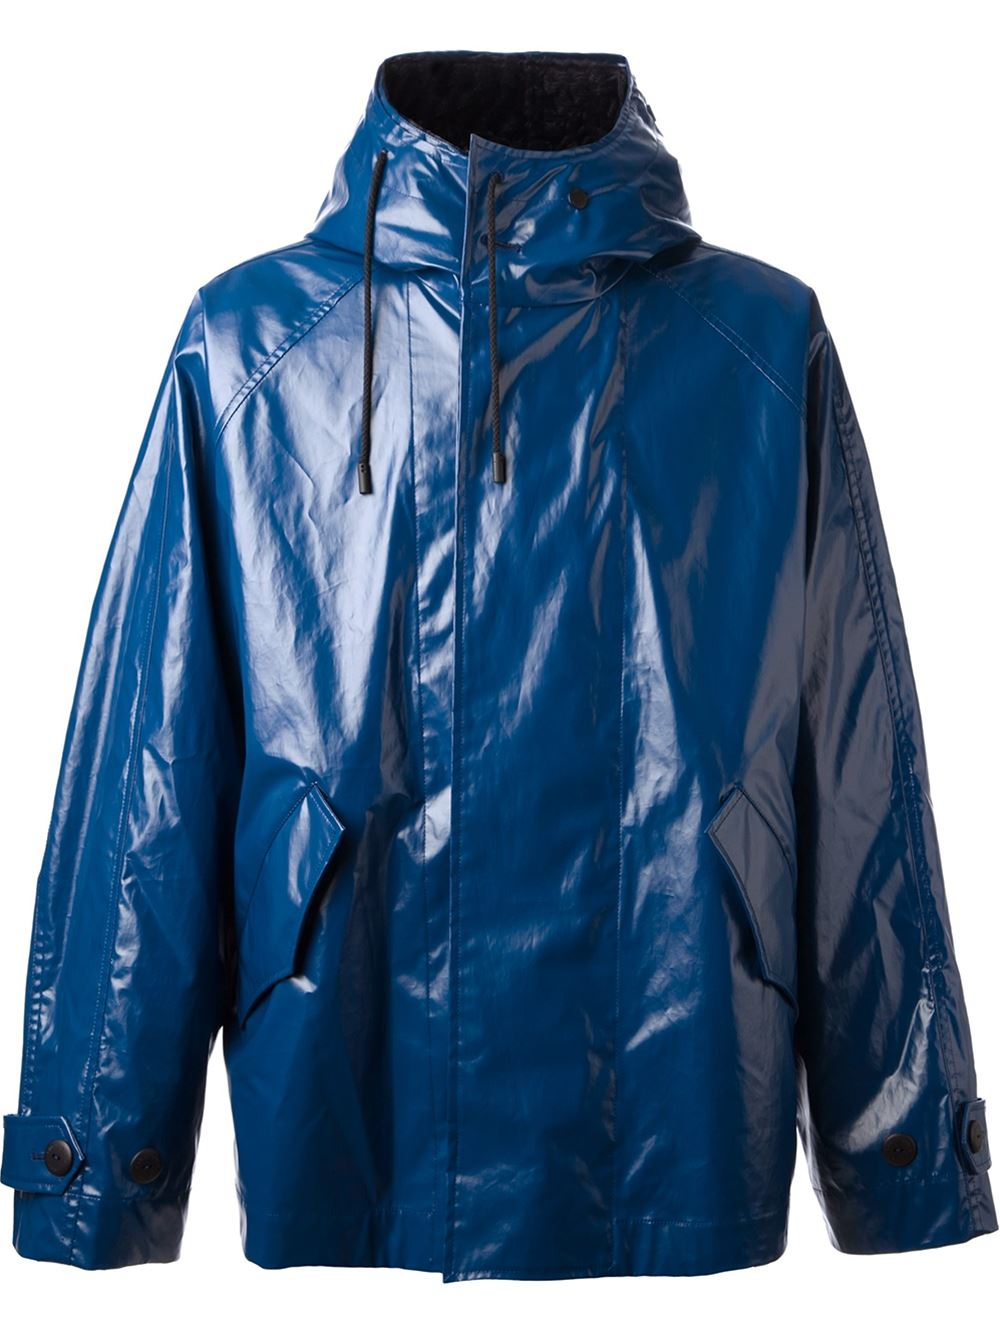 Lyst - Christopher Kane Hooded Windbreaker Jacket in Blue for Men